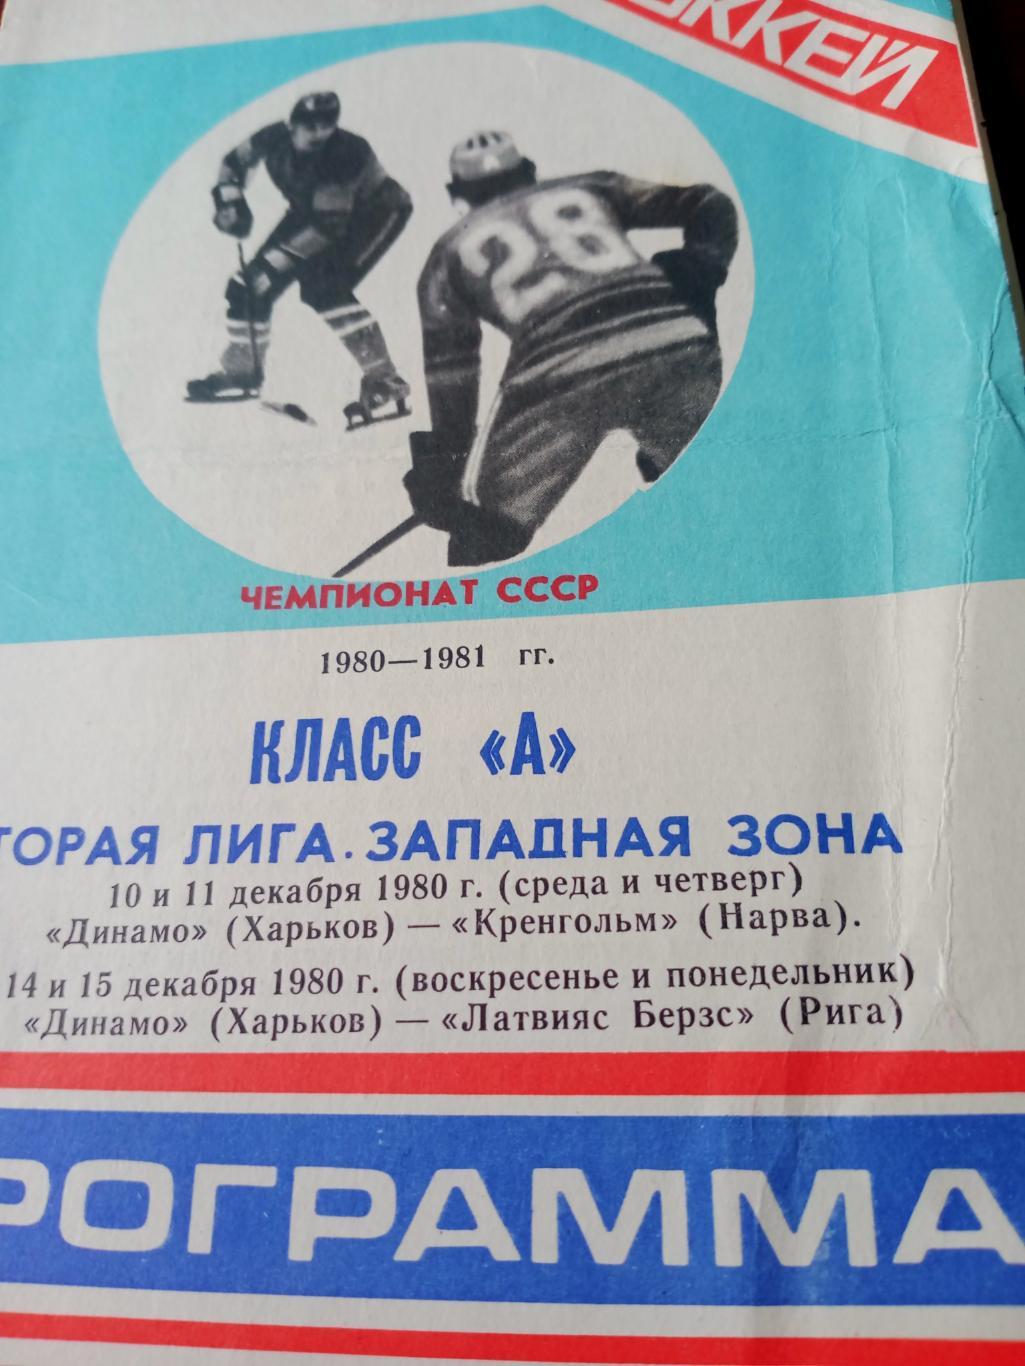 Динамо Харьков, 1980 г - Кренгольм Нарва и Латвияс Берзс Рига (10-15.12)